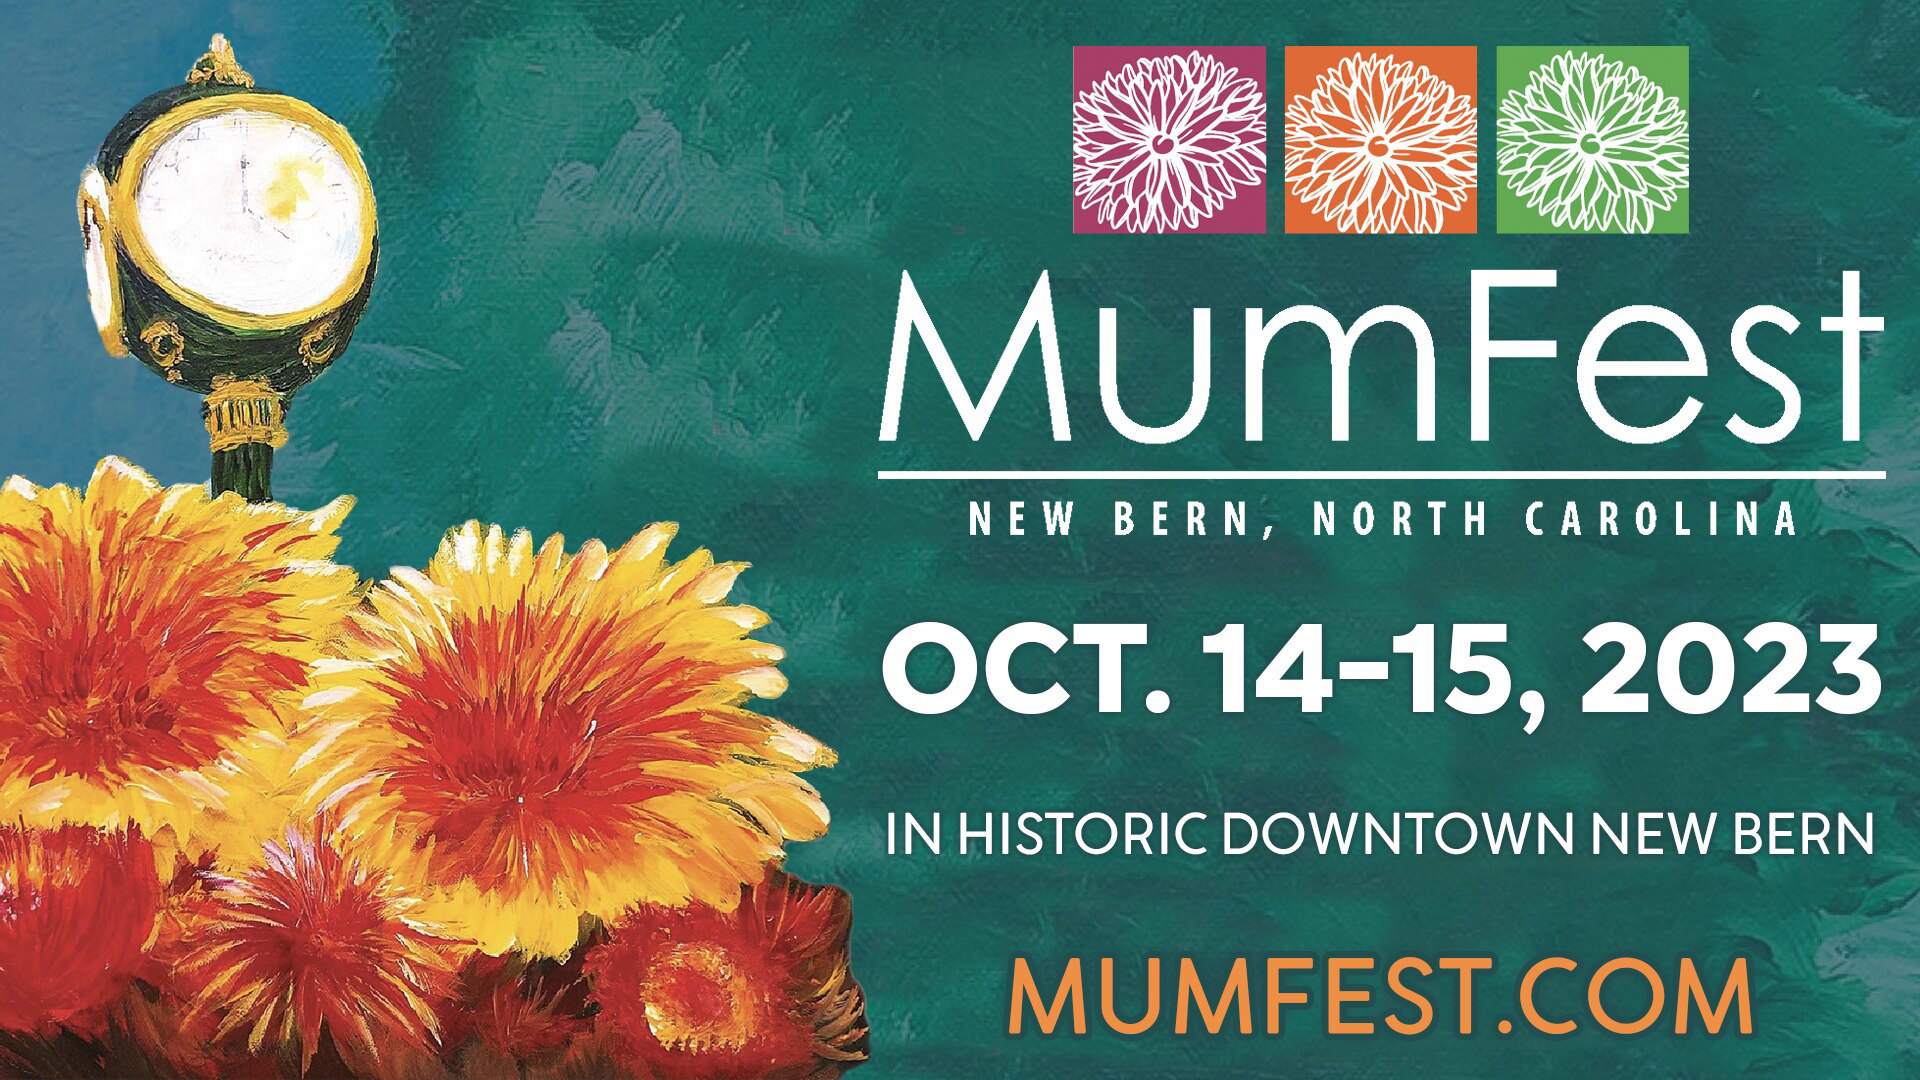 Mumfest returns to historic downtown New Bern Sunday